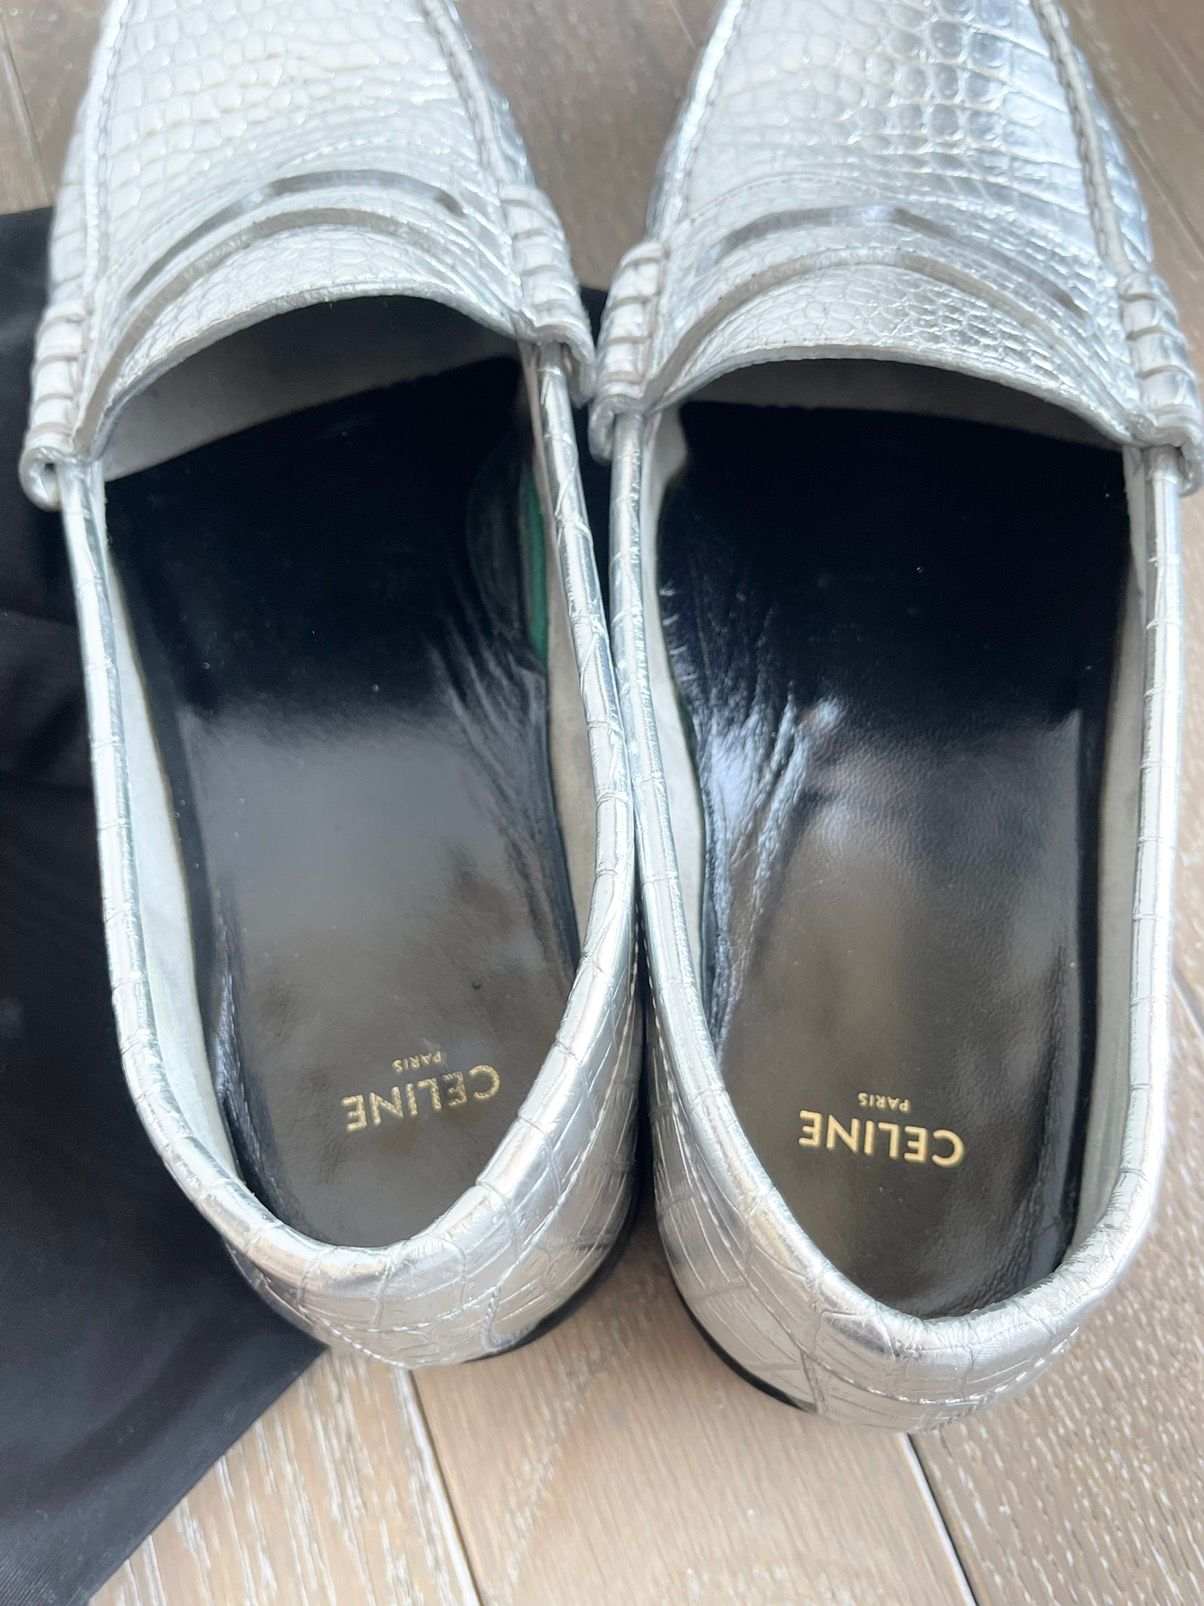 Celine SS20 Hedi Silver Leather Croc Loafer Shoes EU 43